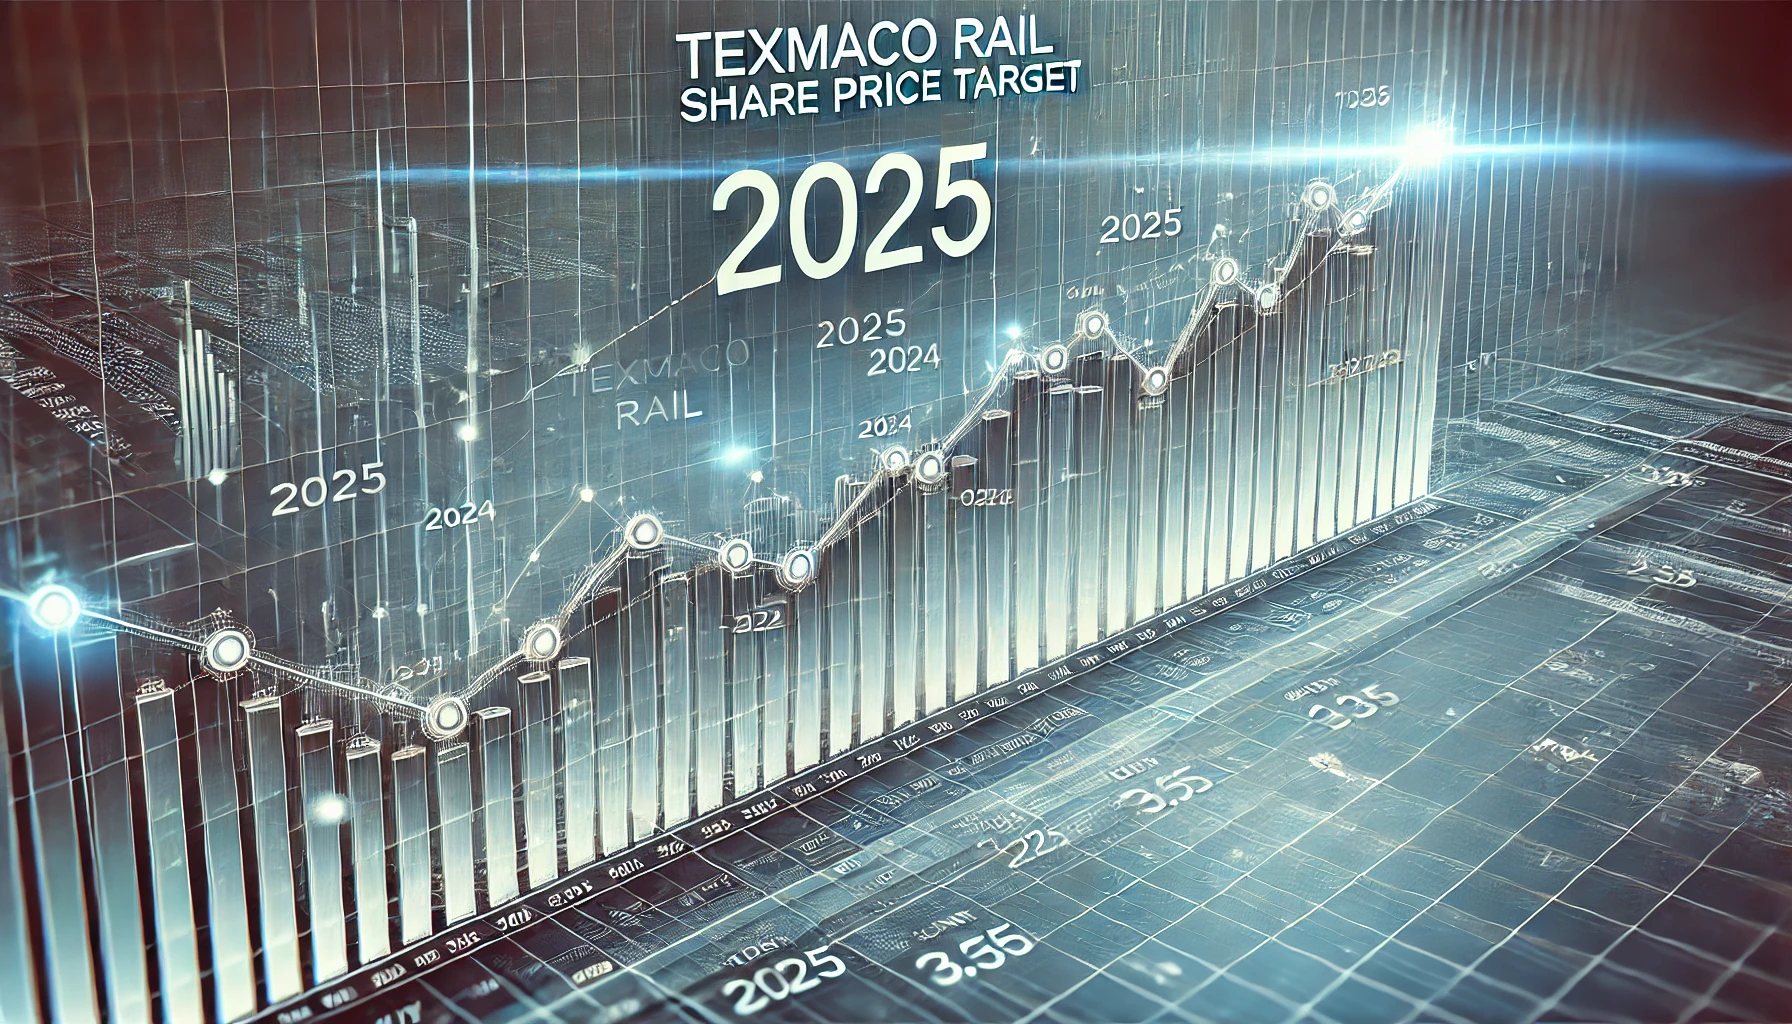 Texmaco Rail Share Price Target 2025